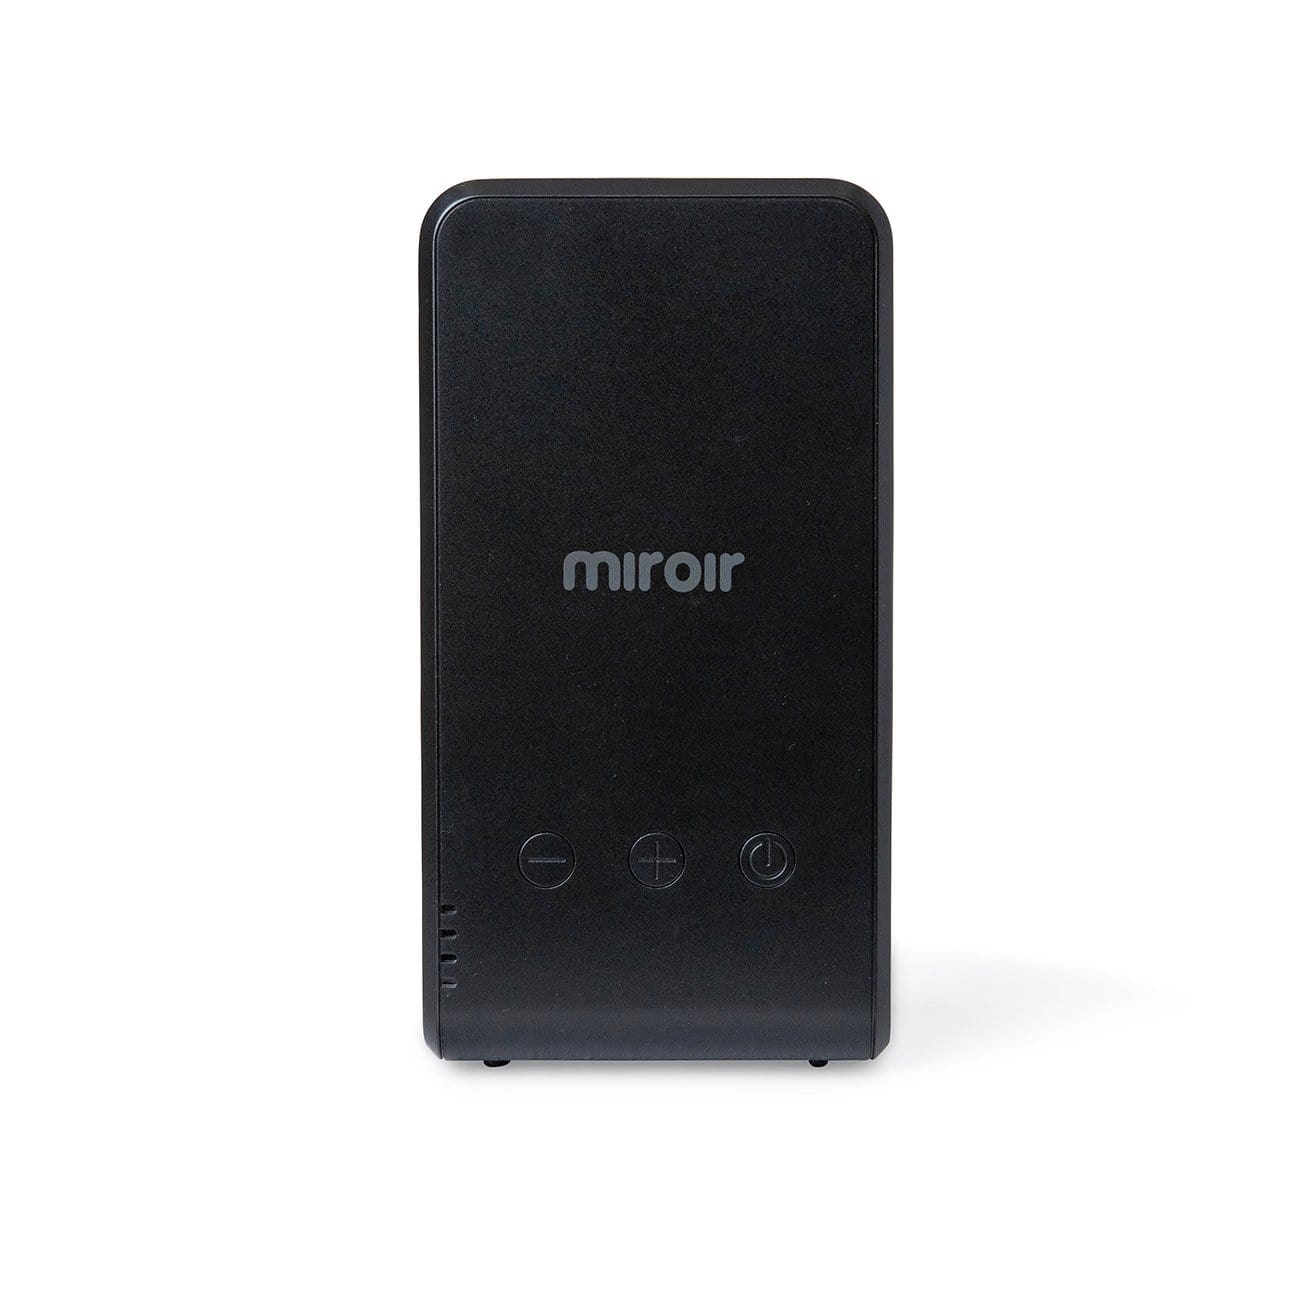 Miroir M189, 720p Native Resolution, HD DLP Projector, Battery-Powered, LED Lamp